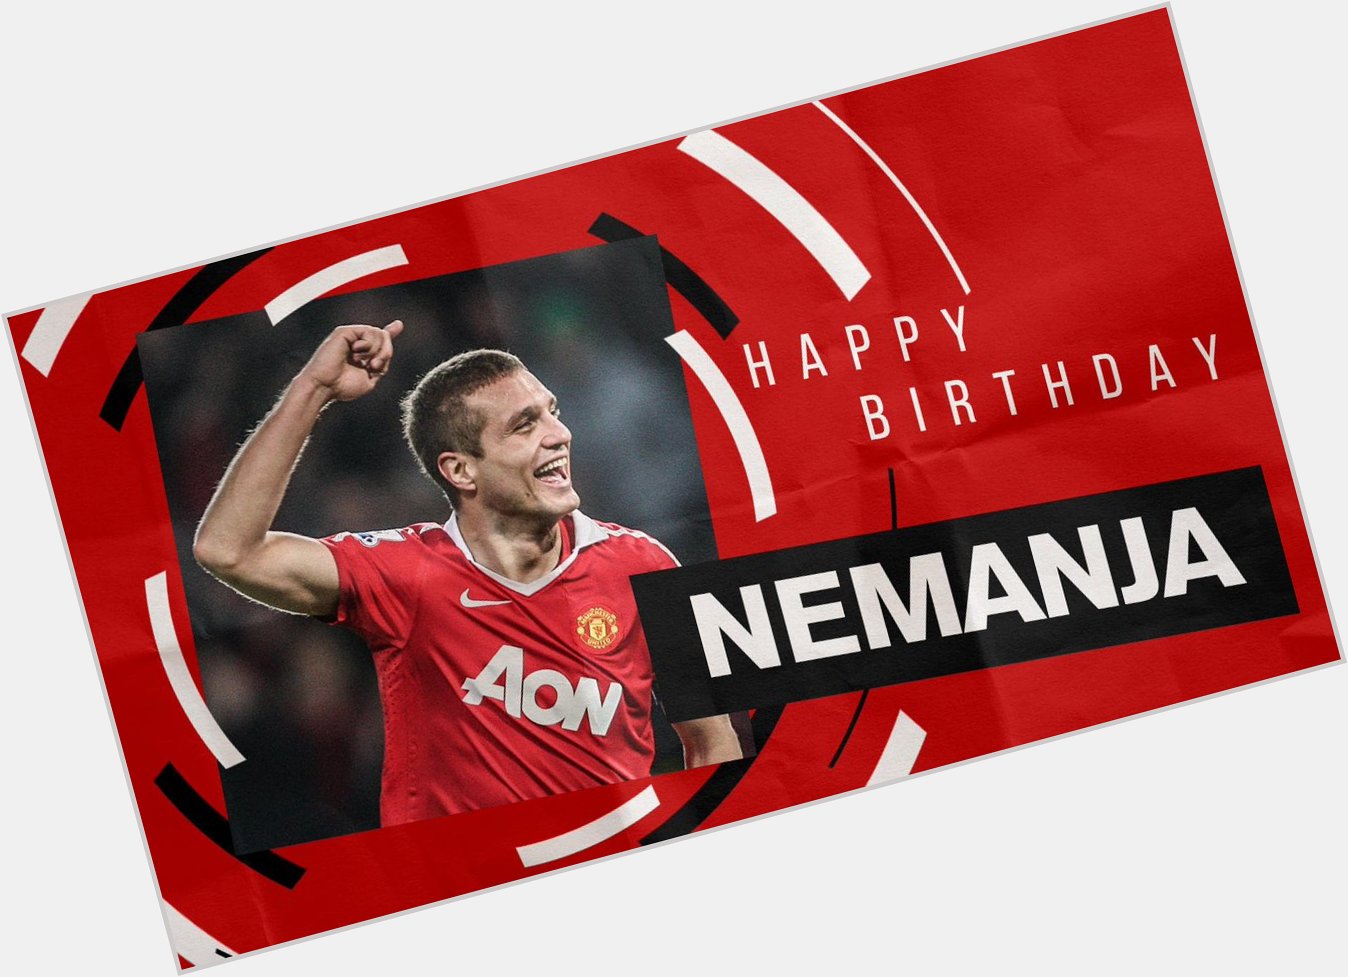 Happy Birthday to the Loyal Great Captain Nemanja Vidic! 